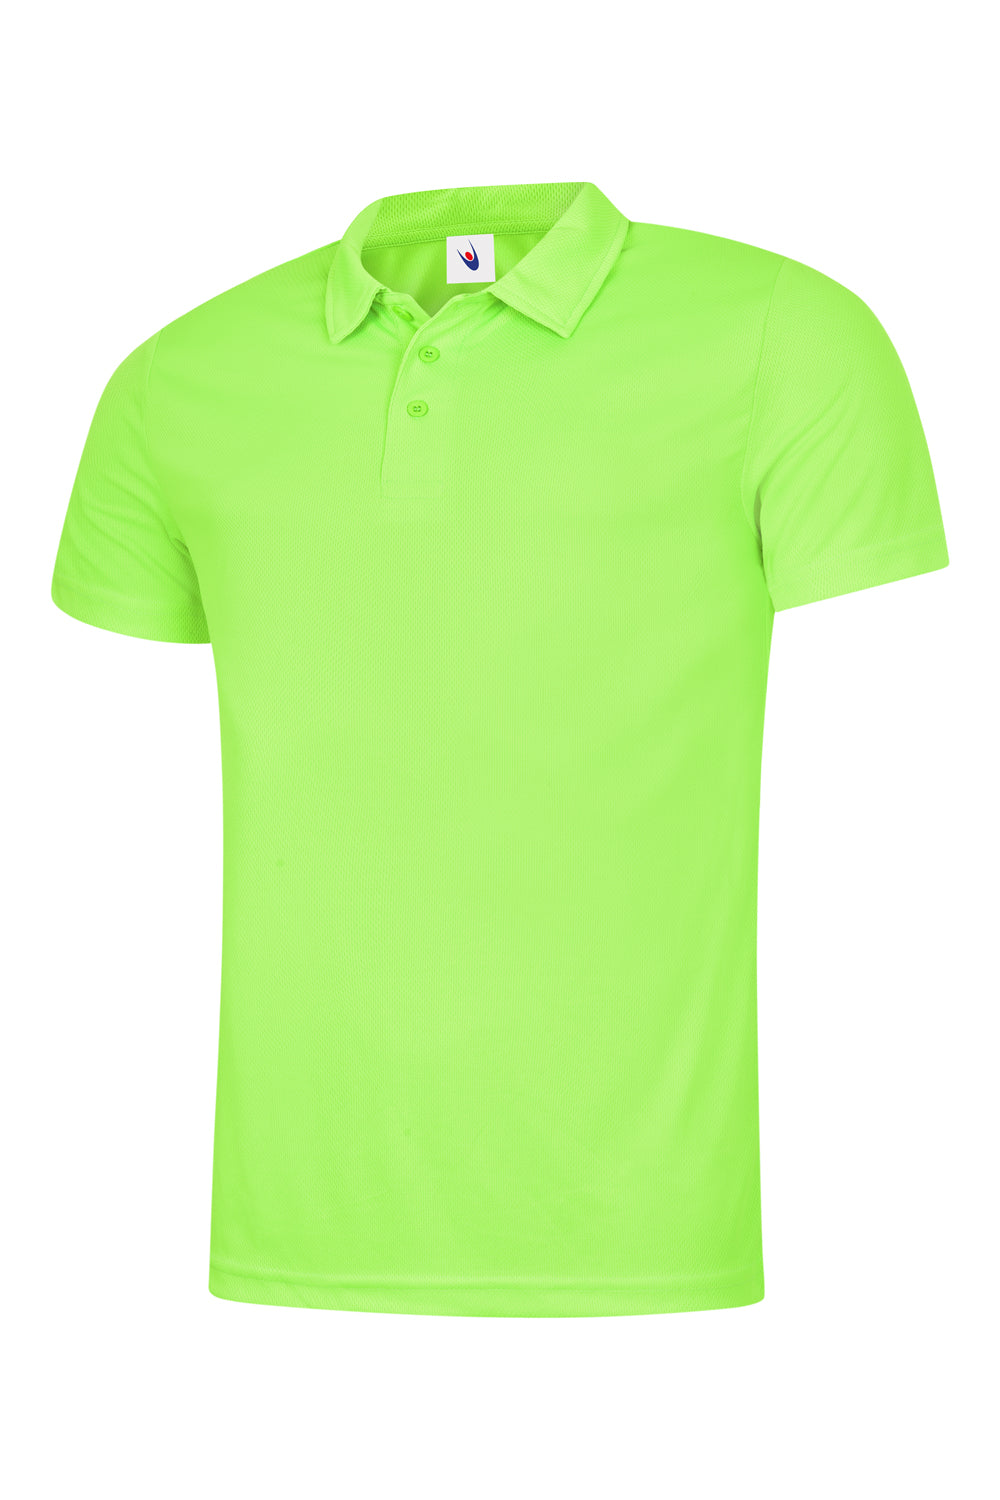 Uneek Mens Ultra Cool Poloshirt UC125 - Electric Green